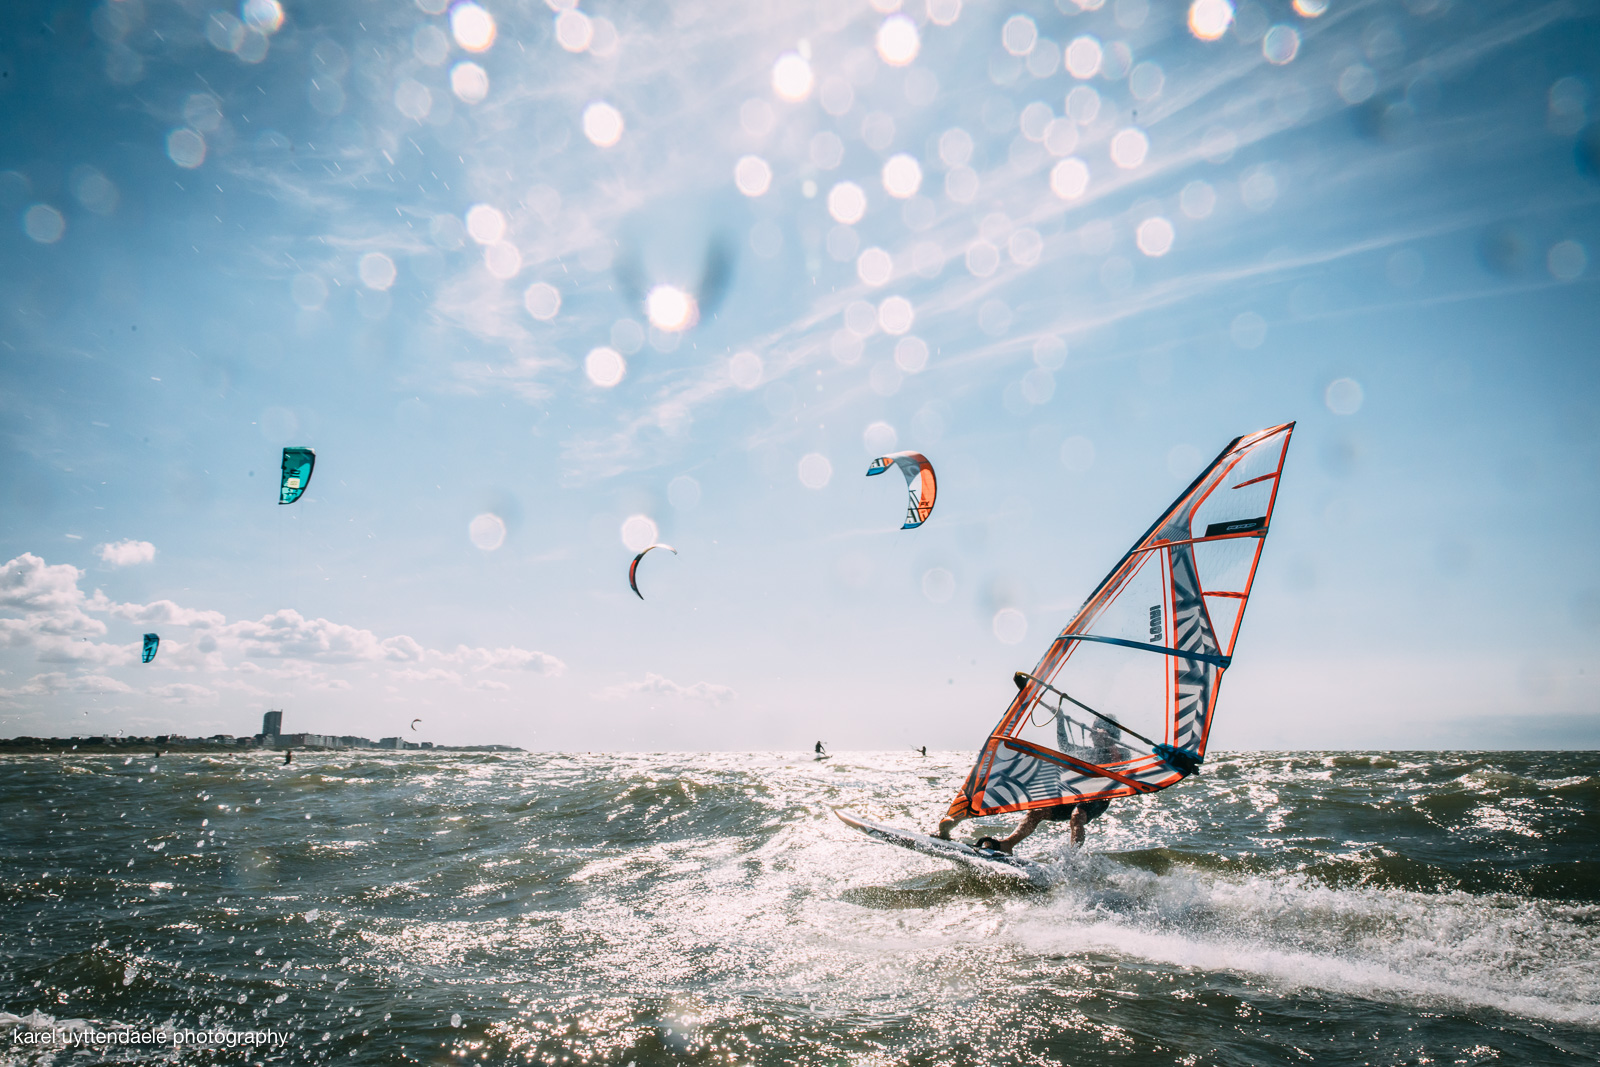 Kite &amp; windsurfing shoot - Windekind - July '18